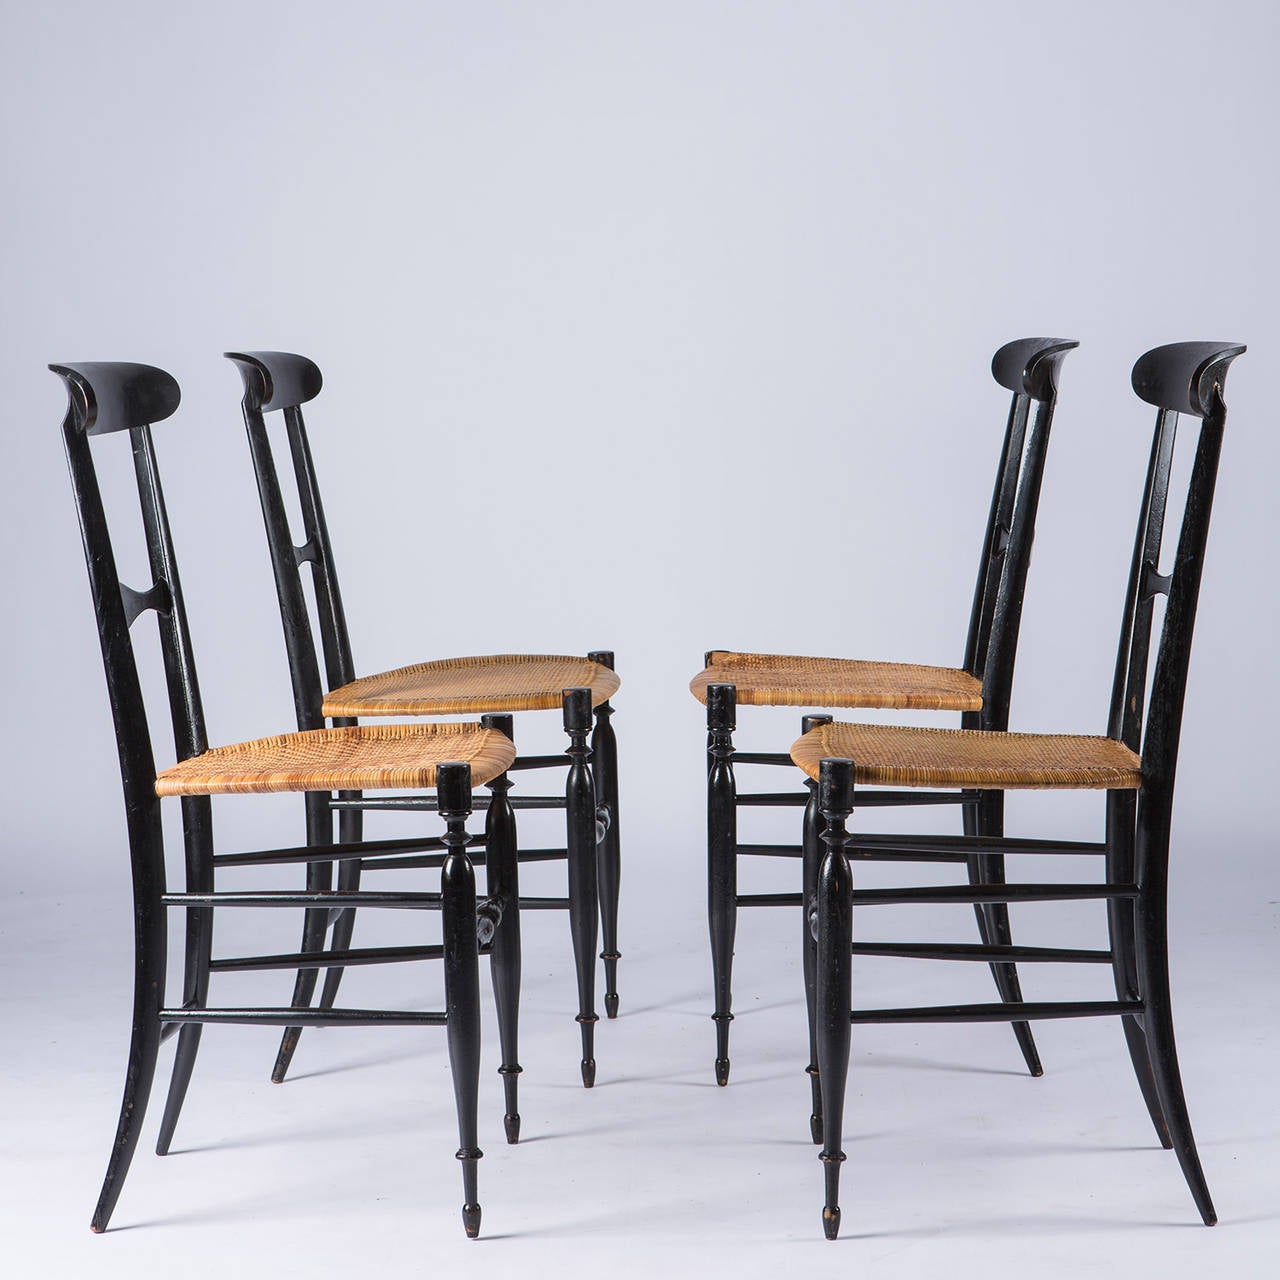 Marvellous set of four Italian chairs model 